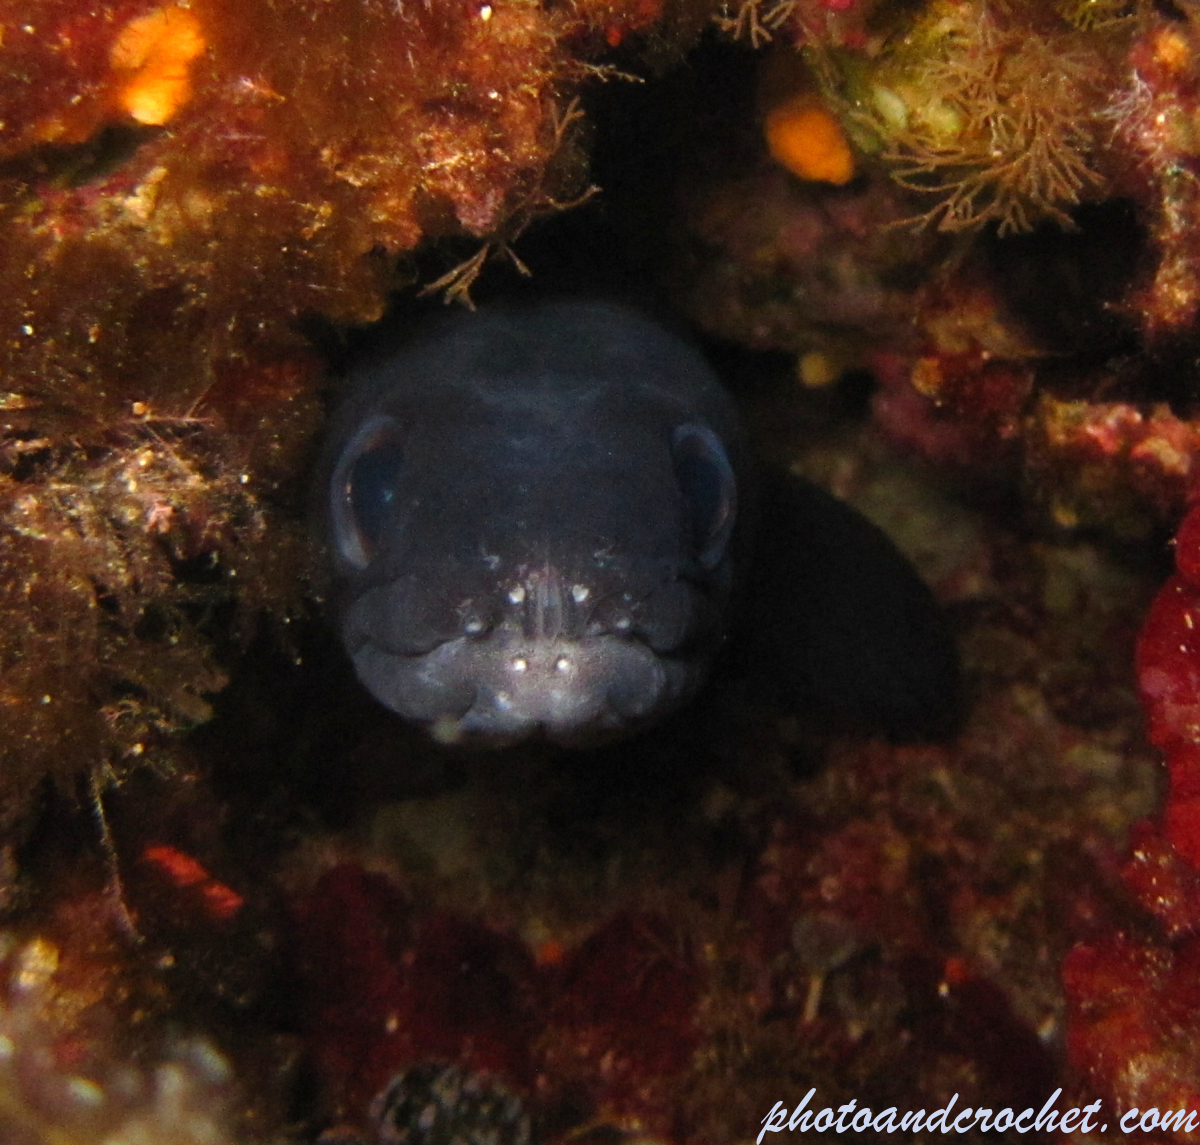 Conger eel - Image